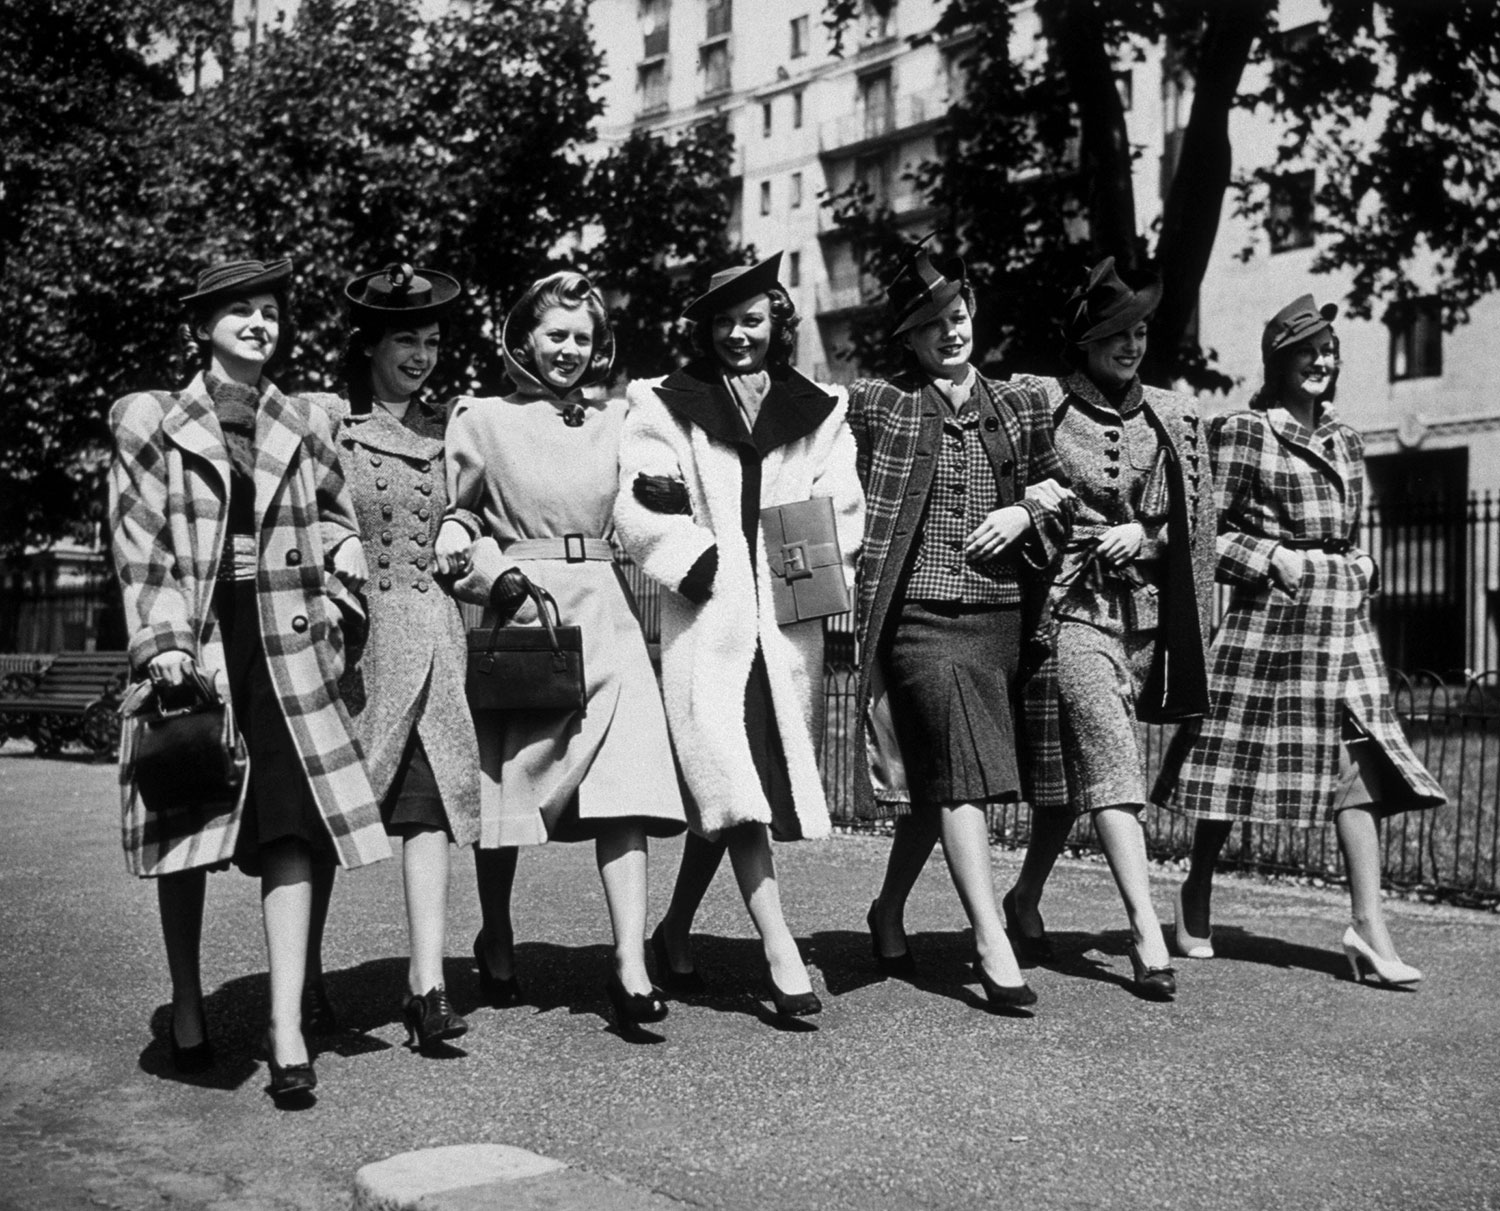 Мода 1940х Америка